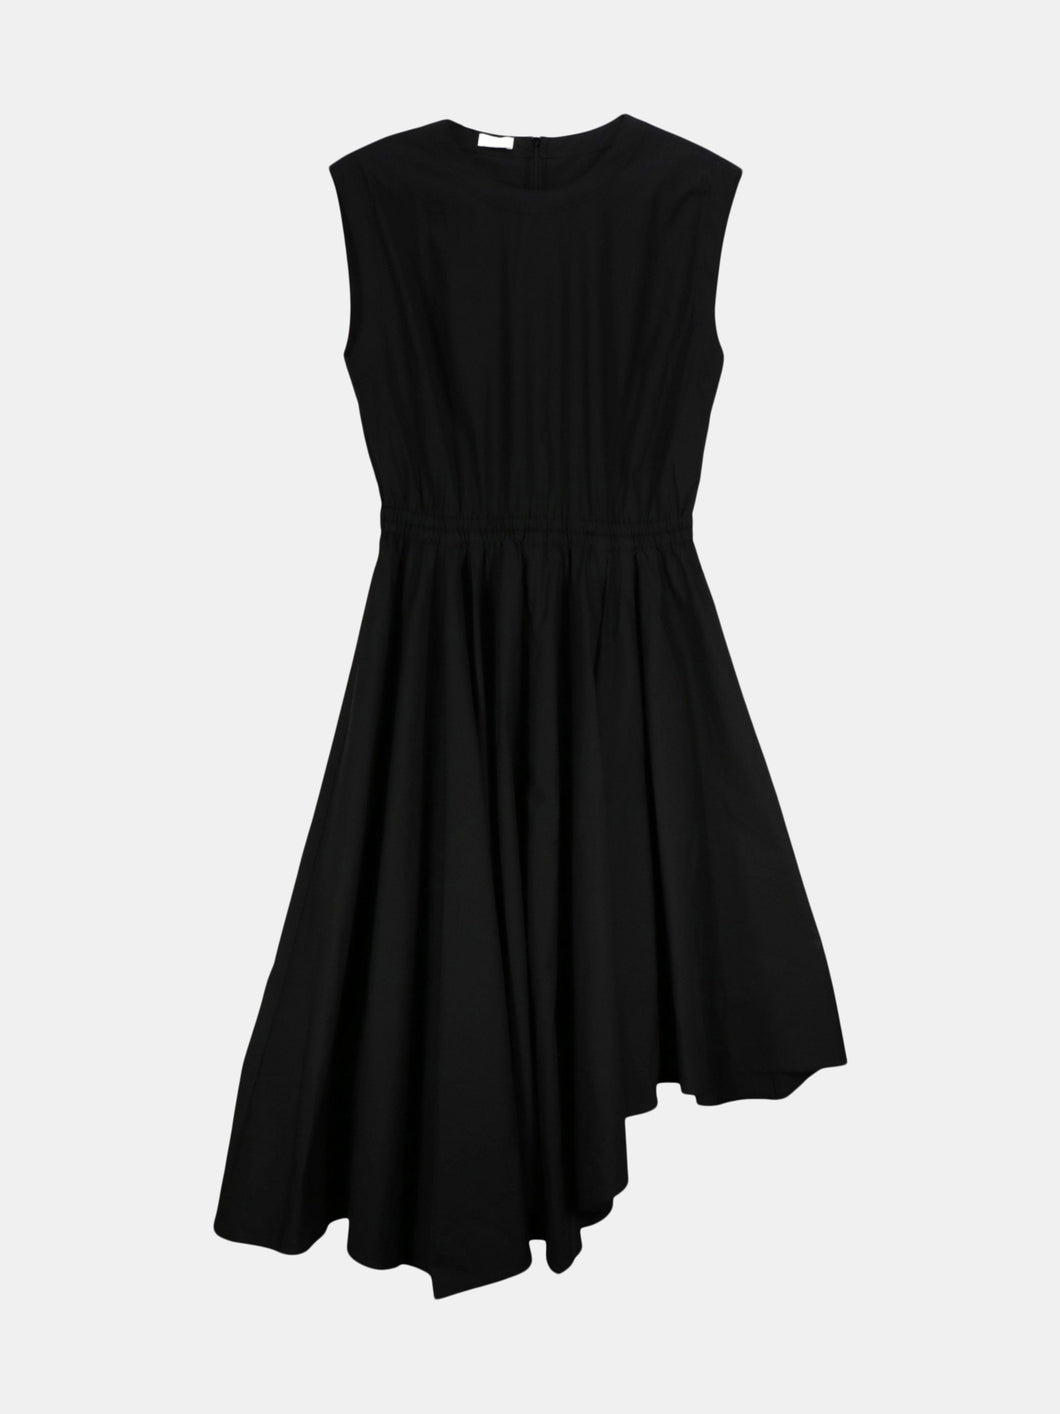 Women's Black Midi Length Dress With Cinched Waist